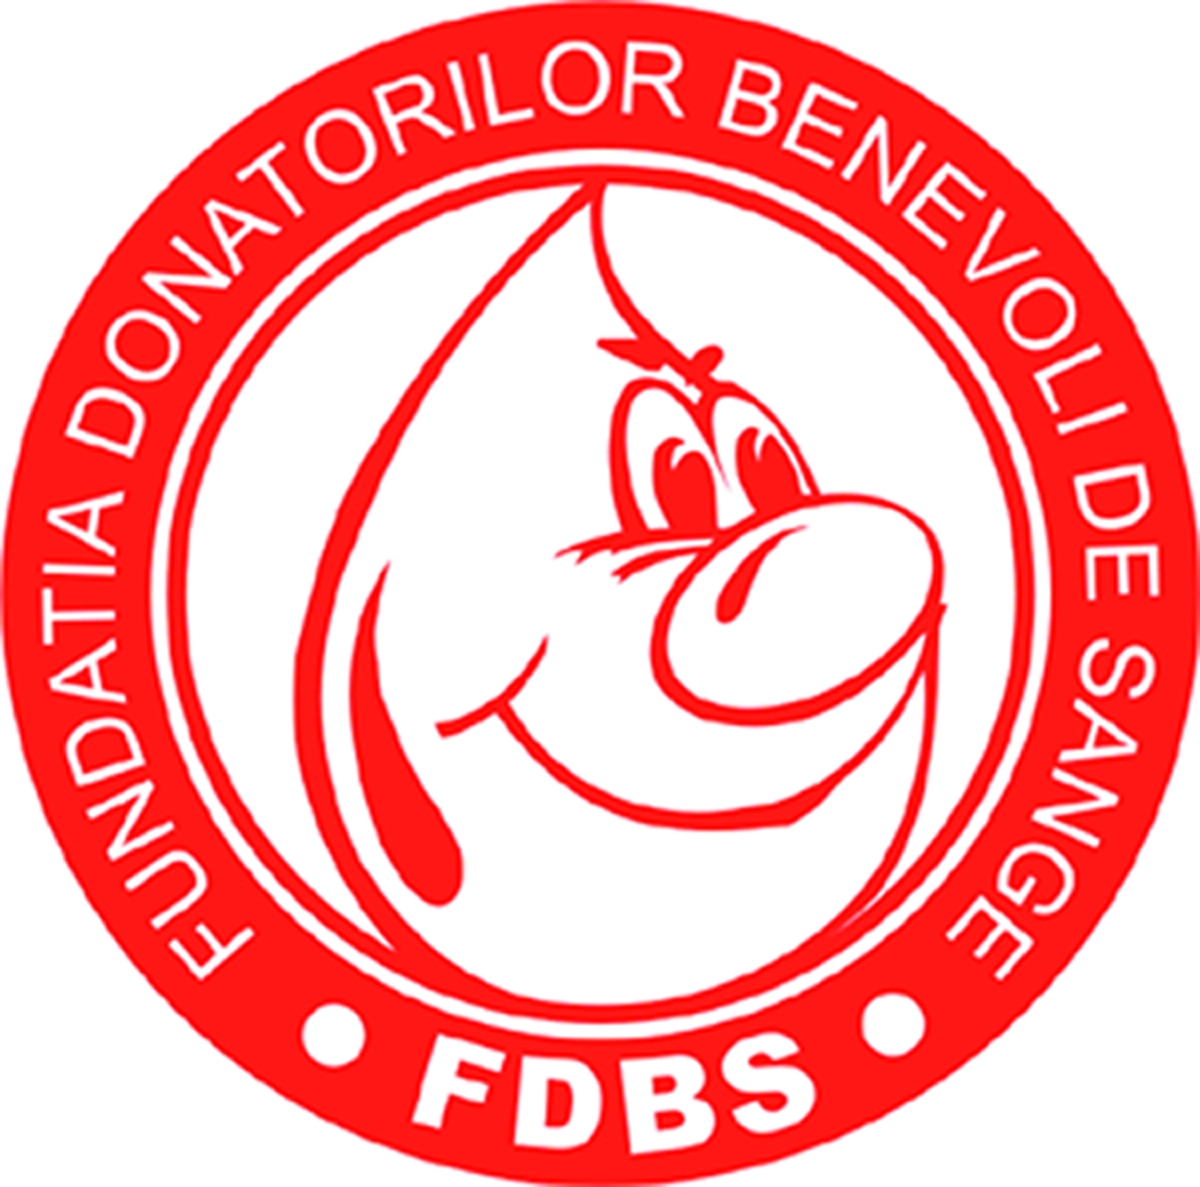 Fundația Donatorilor Benevoli de Sânge logo